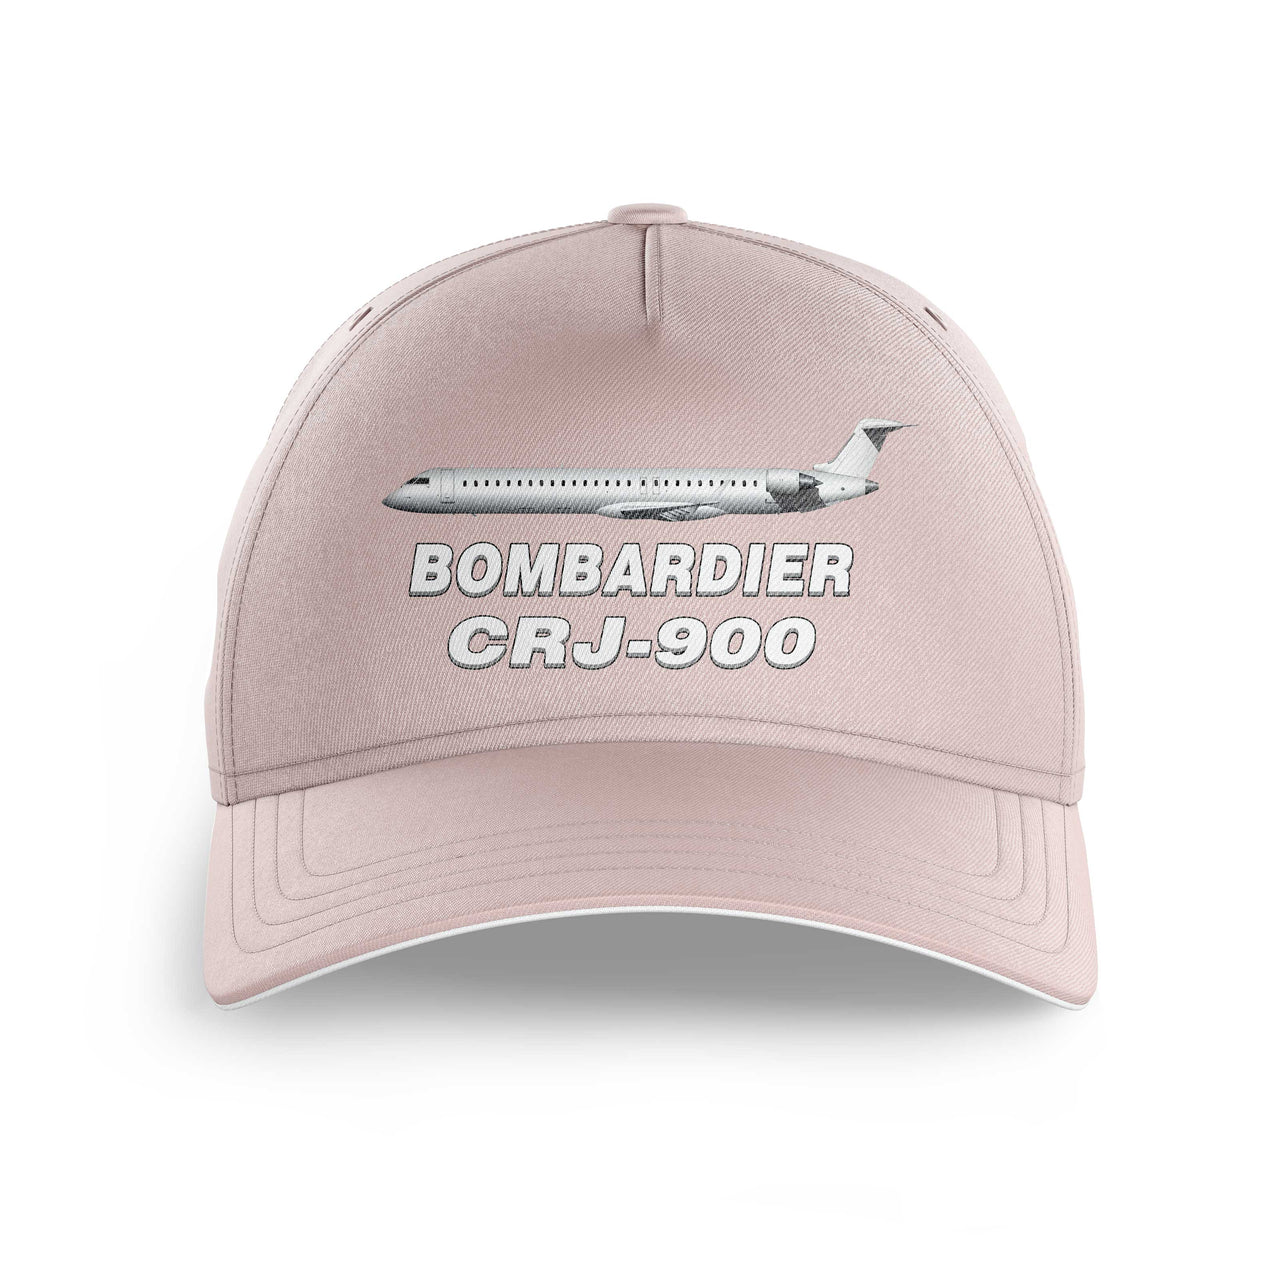 The Bombardier CRJ-900 Printed Hats